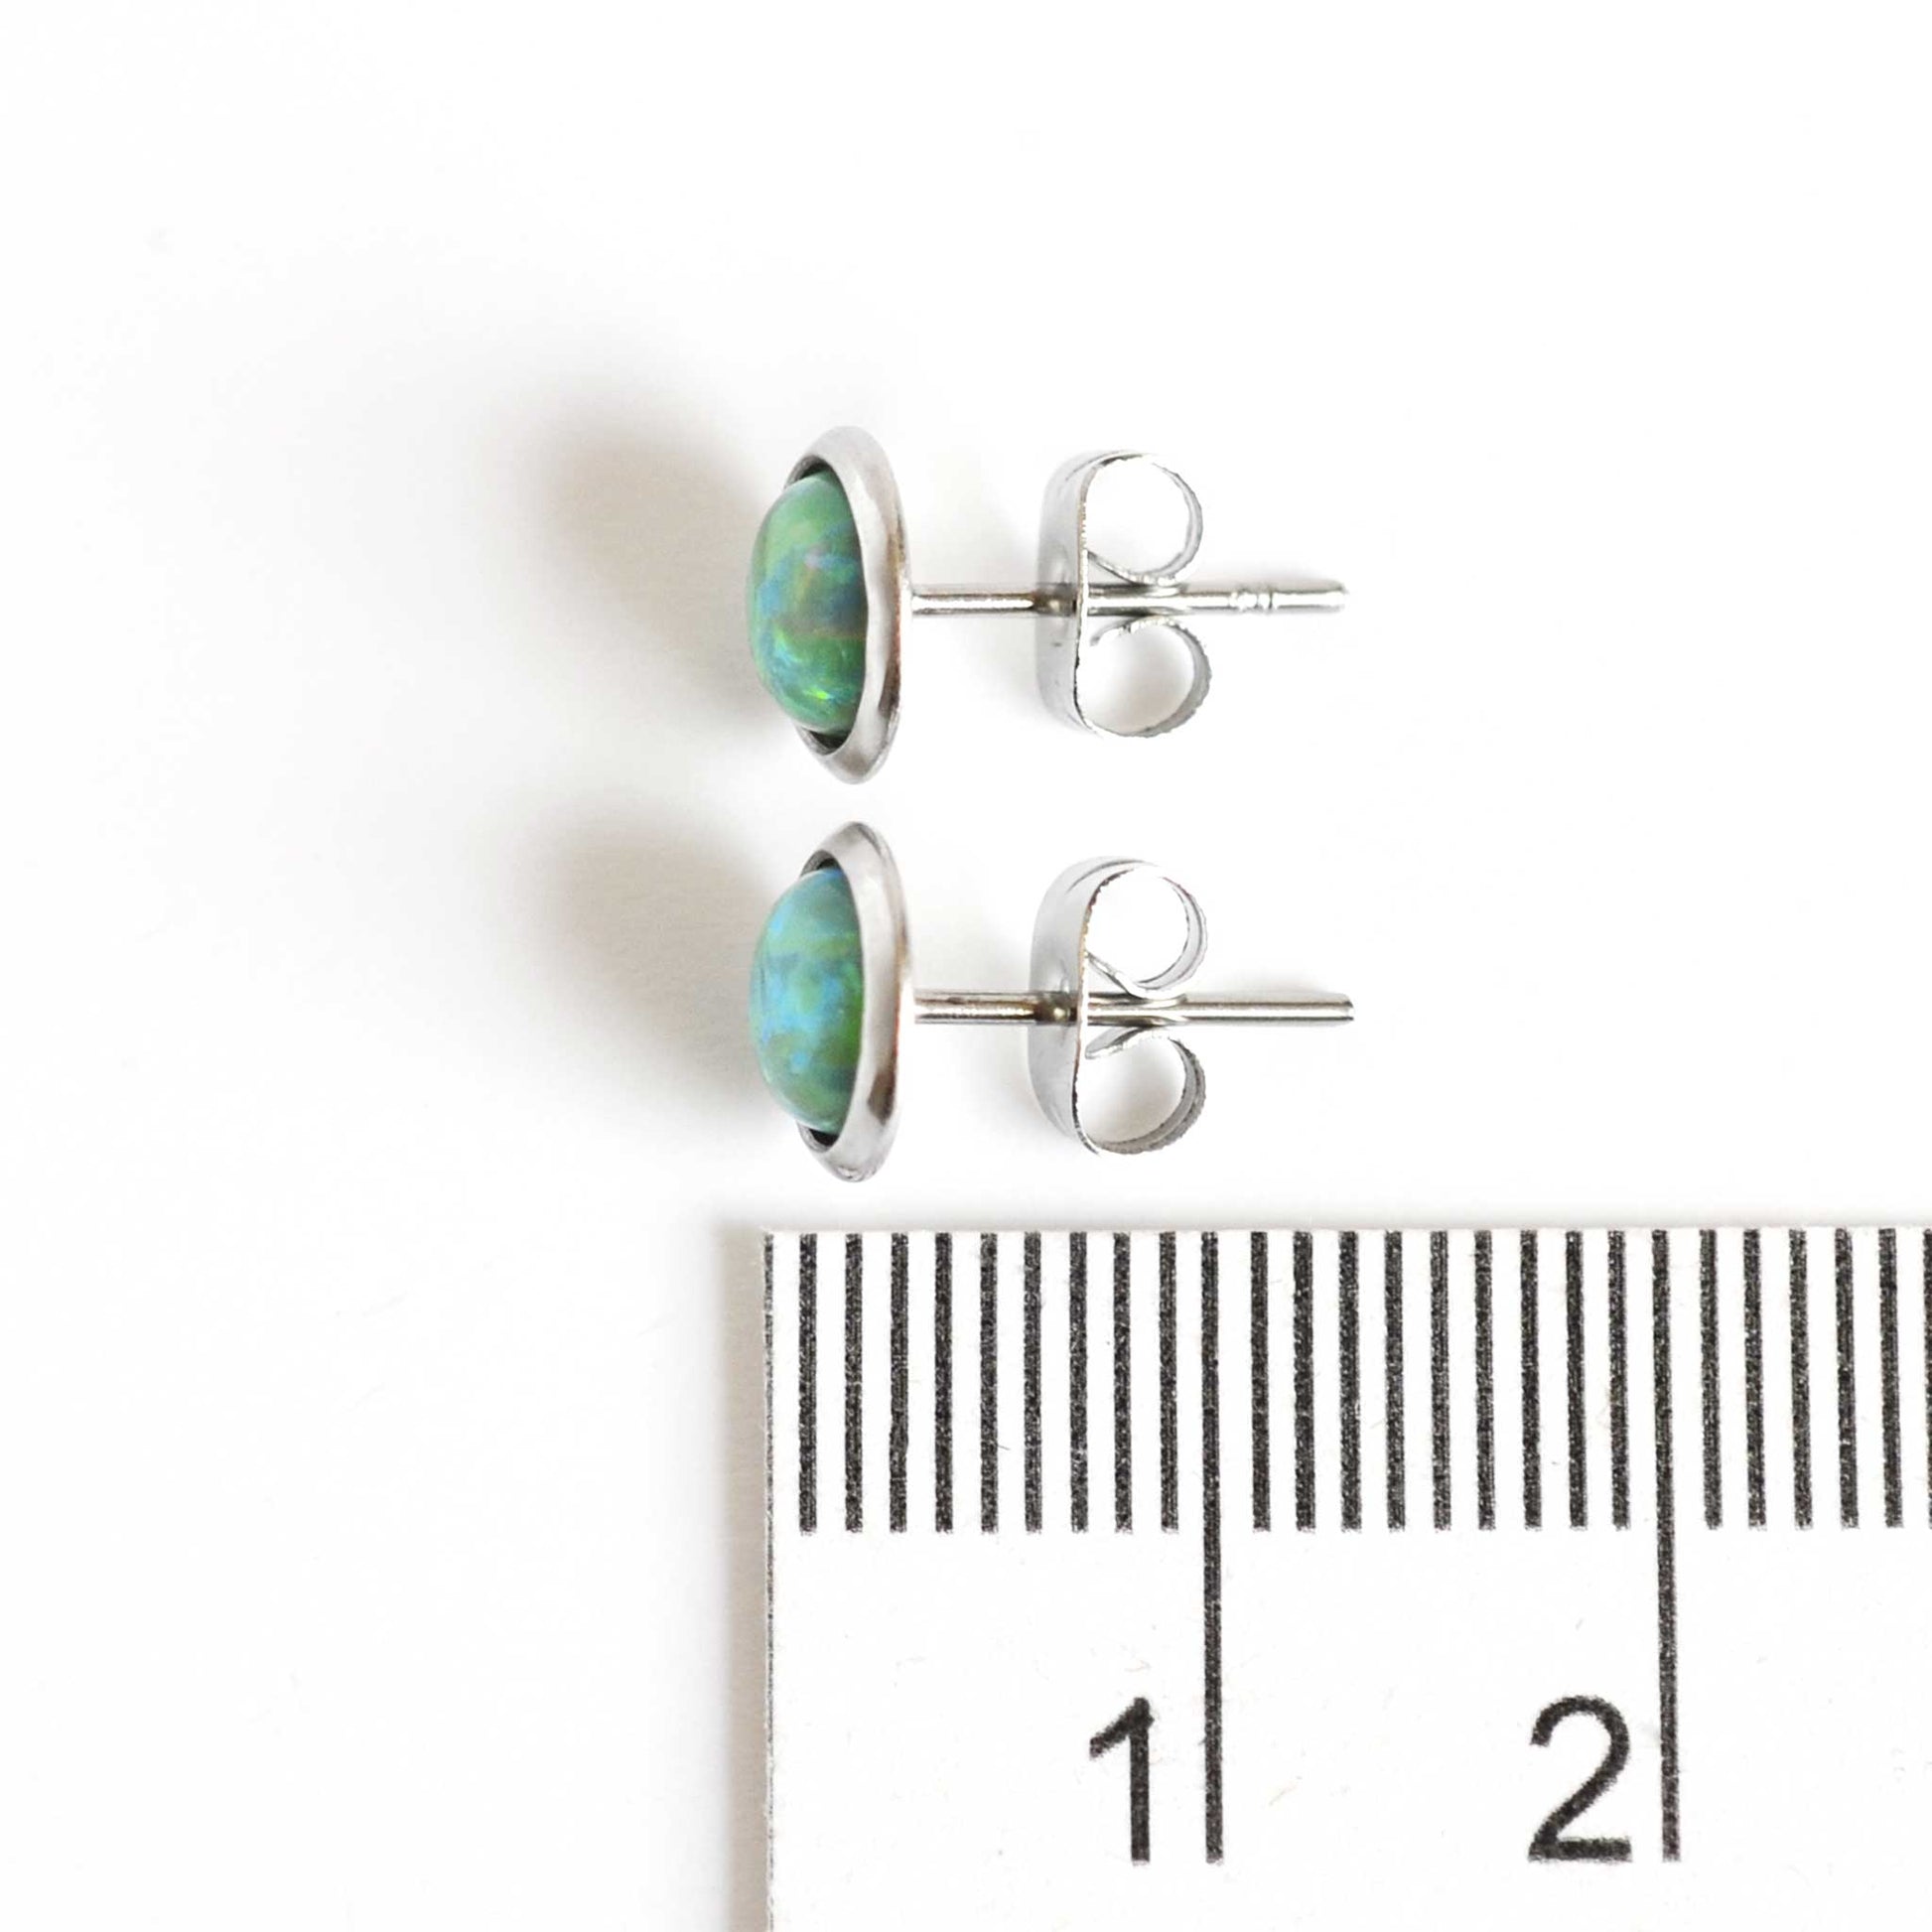 8mm diameter green lab Opal stud earrings next to ruler